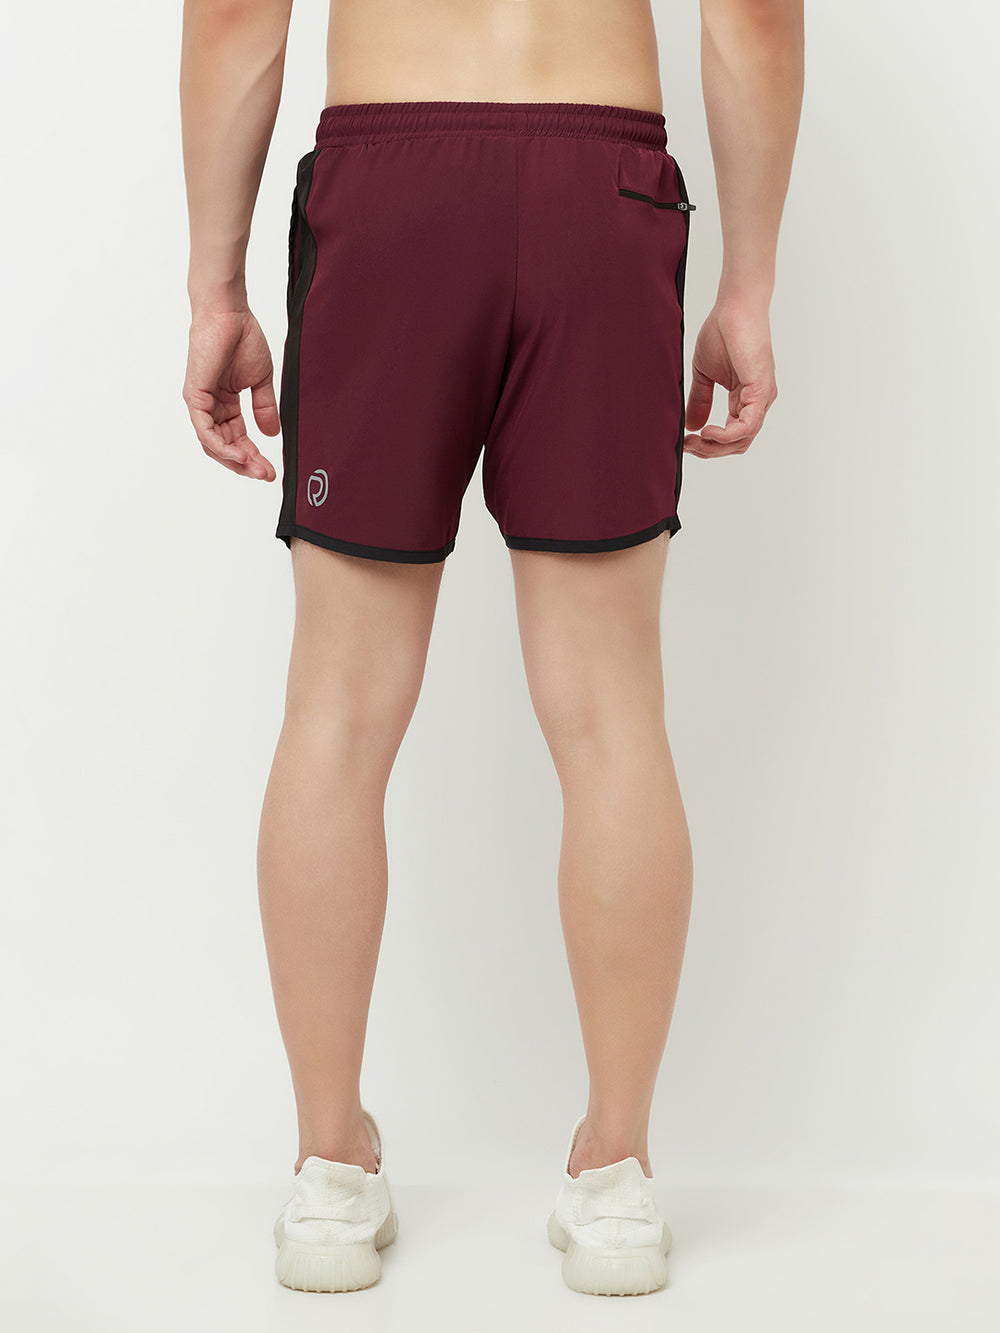 Women's Sports Shorts with Phone Pocket- Navy Printed TRUEREVO™